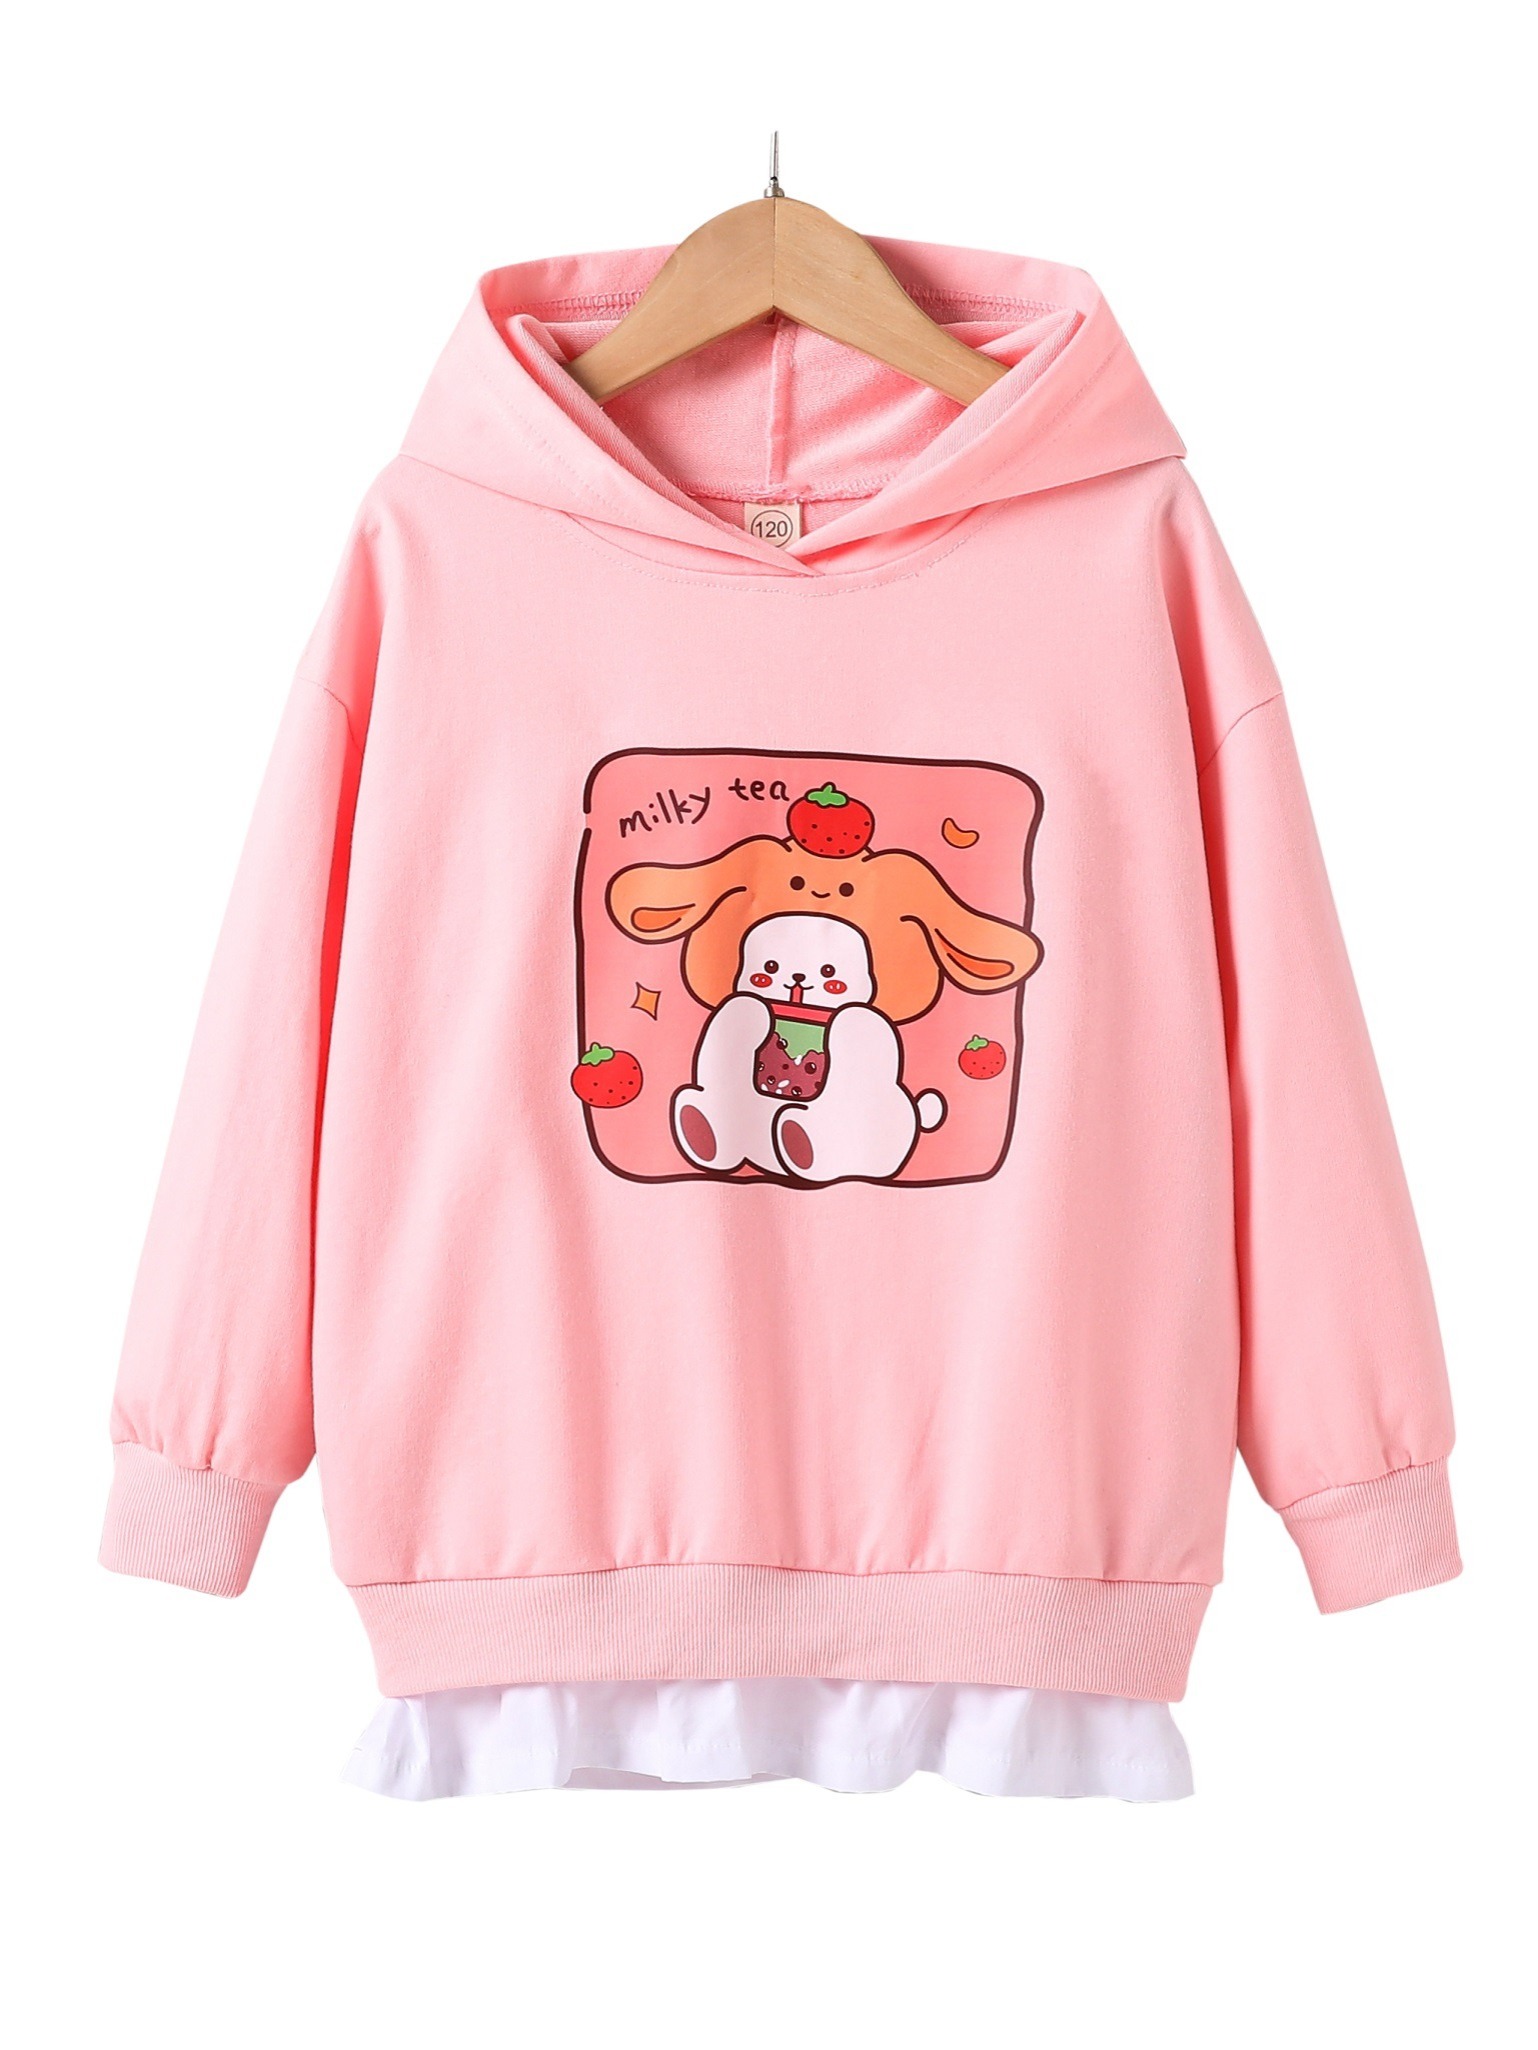 Kawaii Strawberry Hoodie Women Girls Cute Pink Sweatshirt Japanese Style  Long Sleeve Causal Top Pullover Fall Autumn